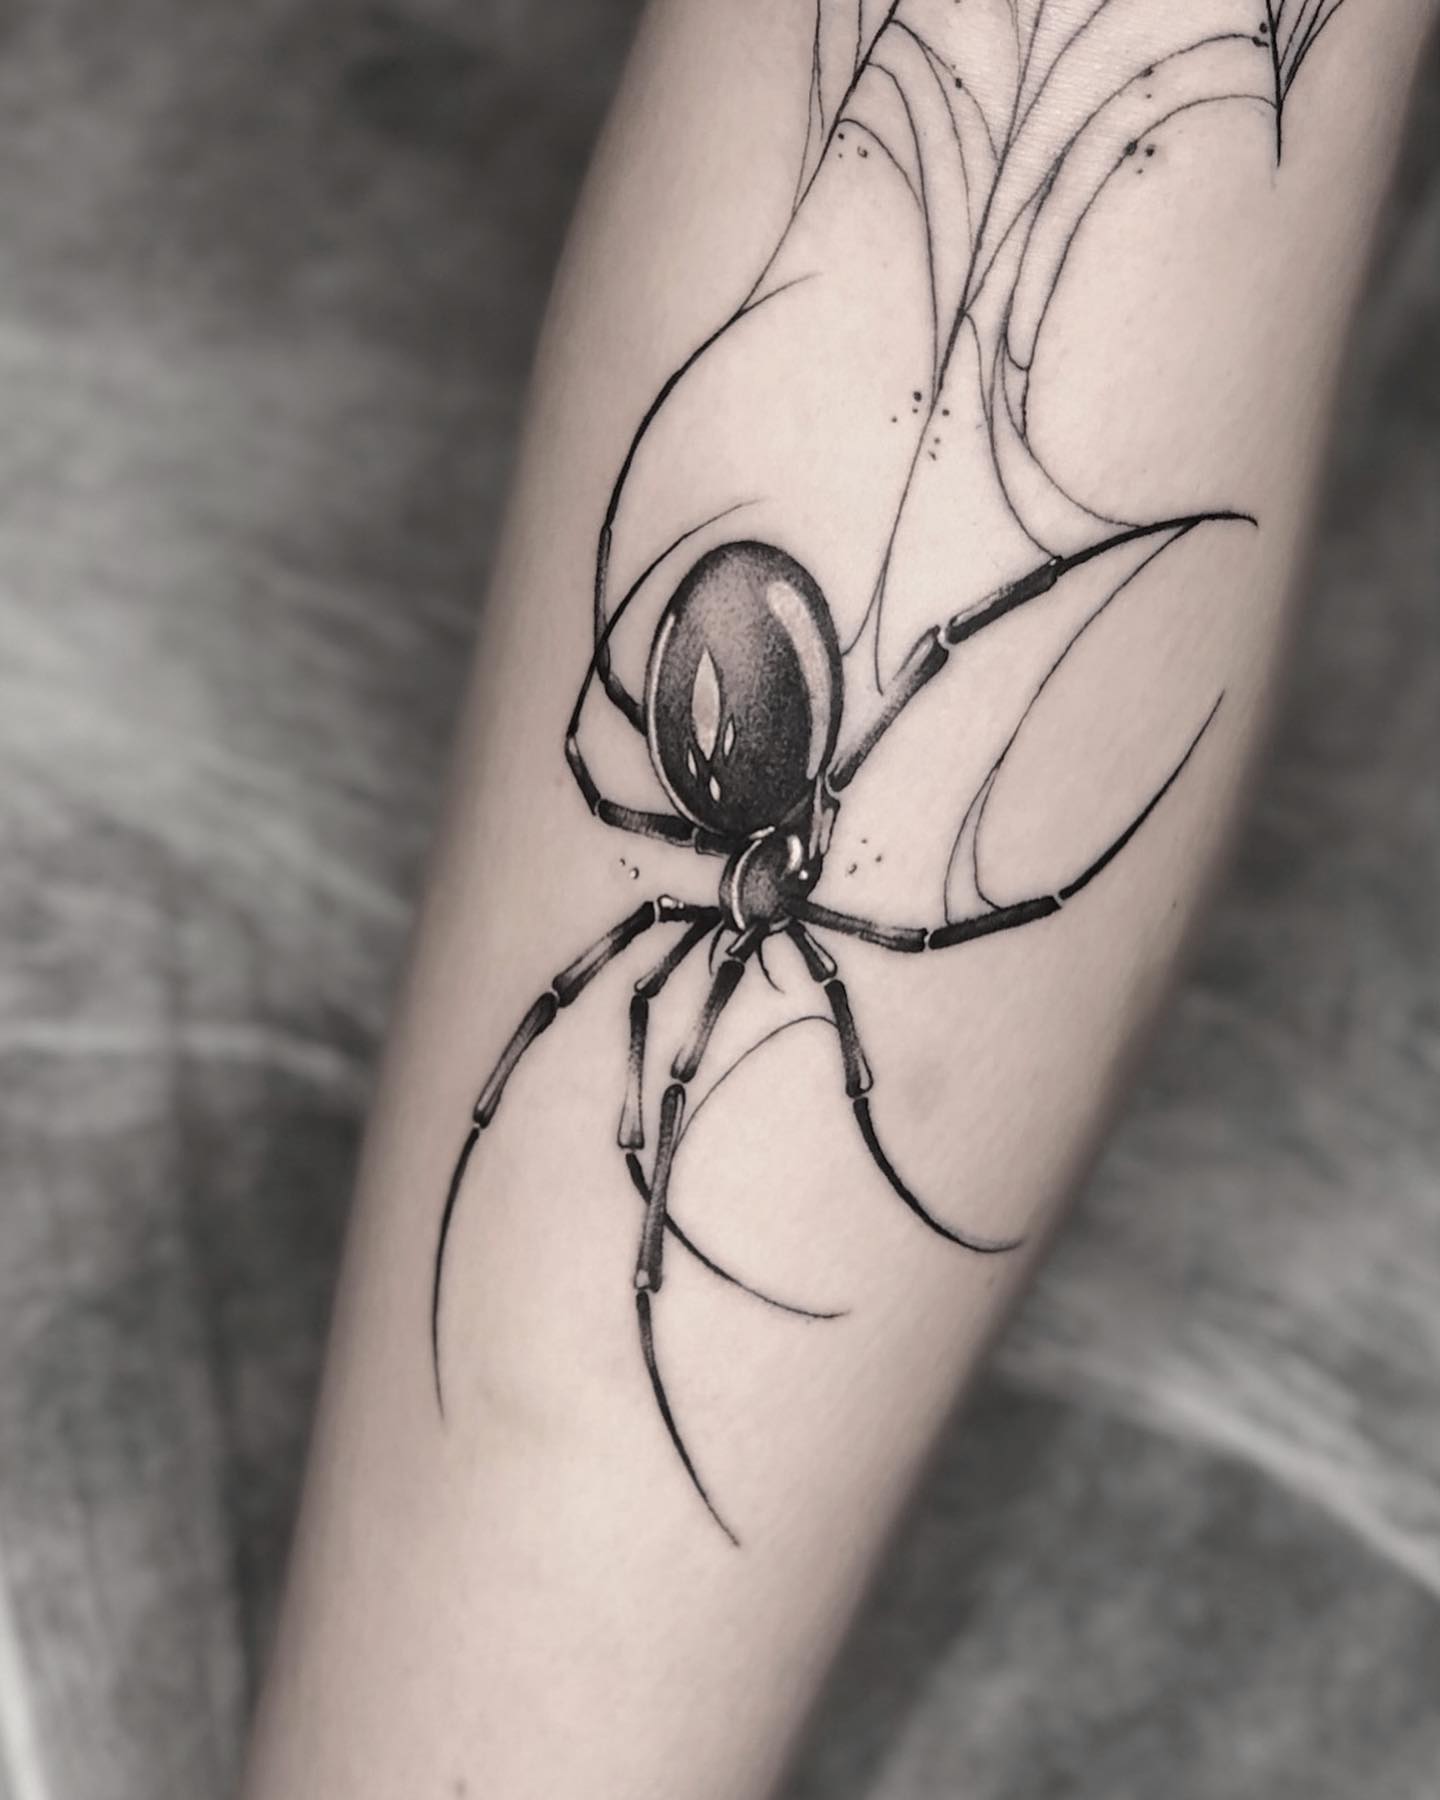 Tatuaje de araña y tela de araña con tinta negra.